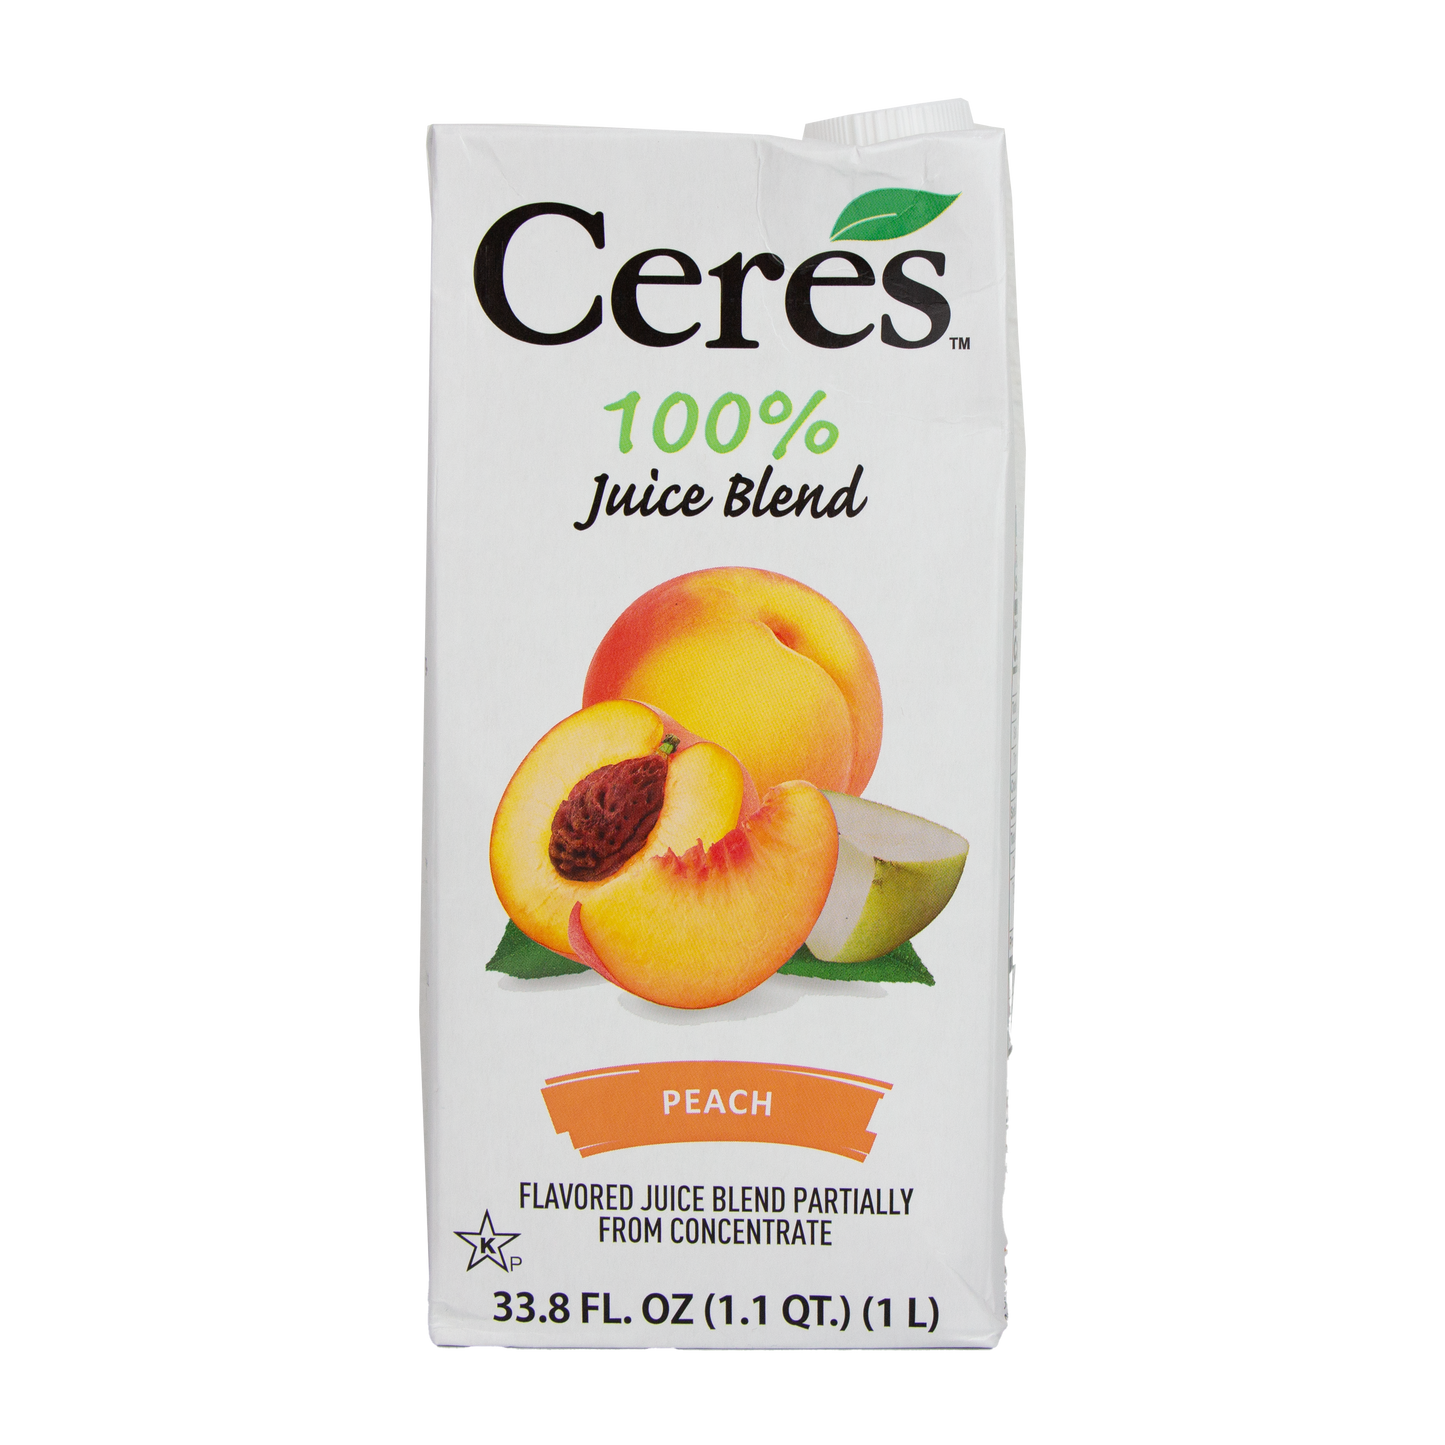 Ceres 100% Juice Blend - Peach